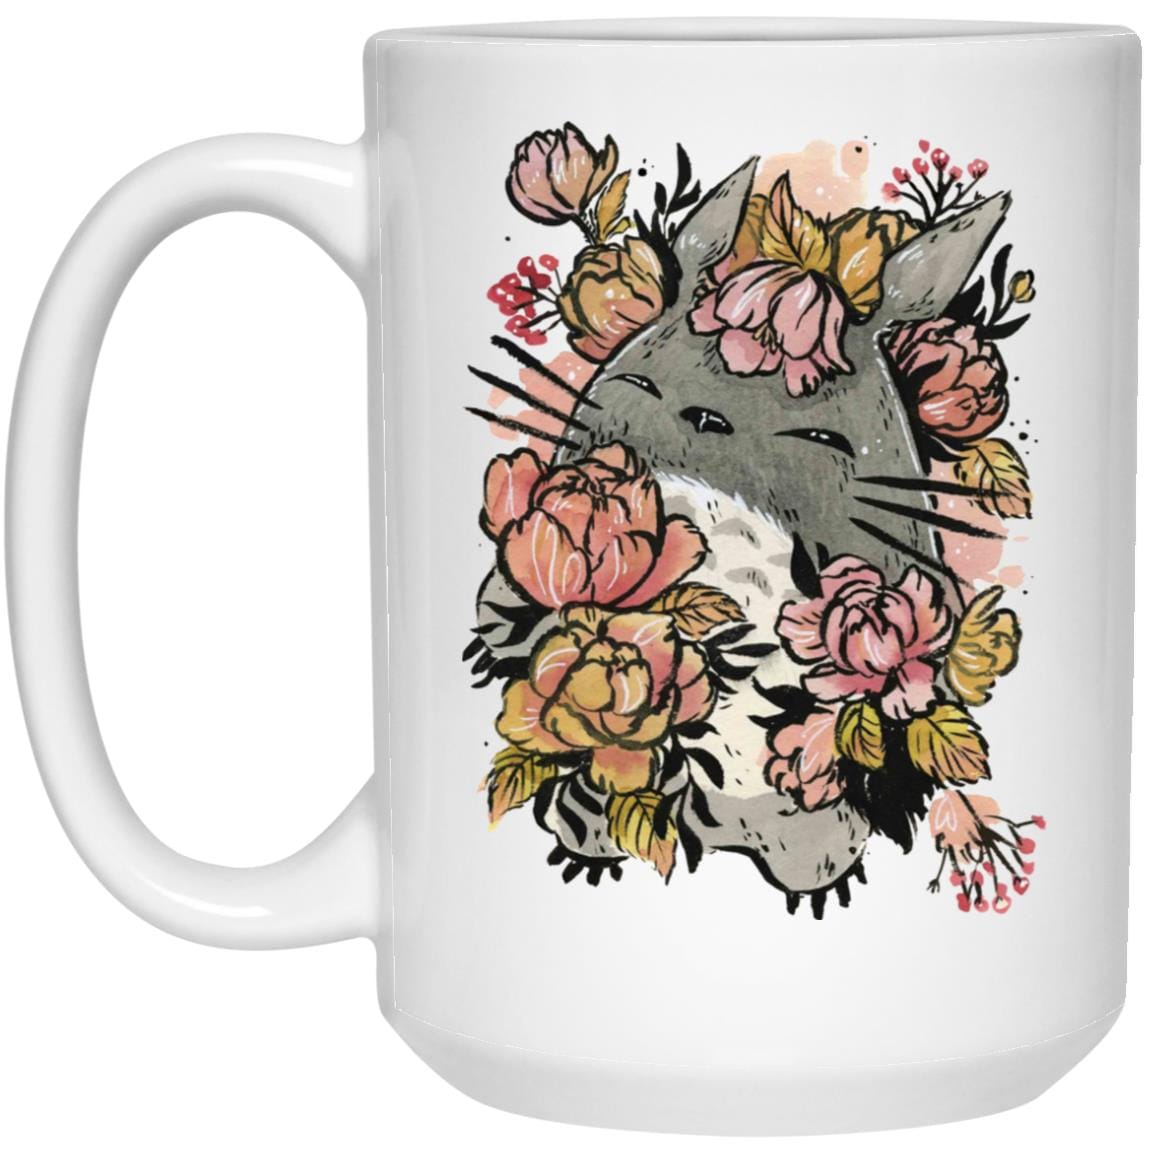 Totoro by the Flowers Mug